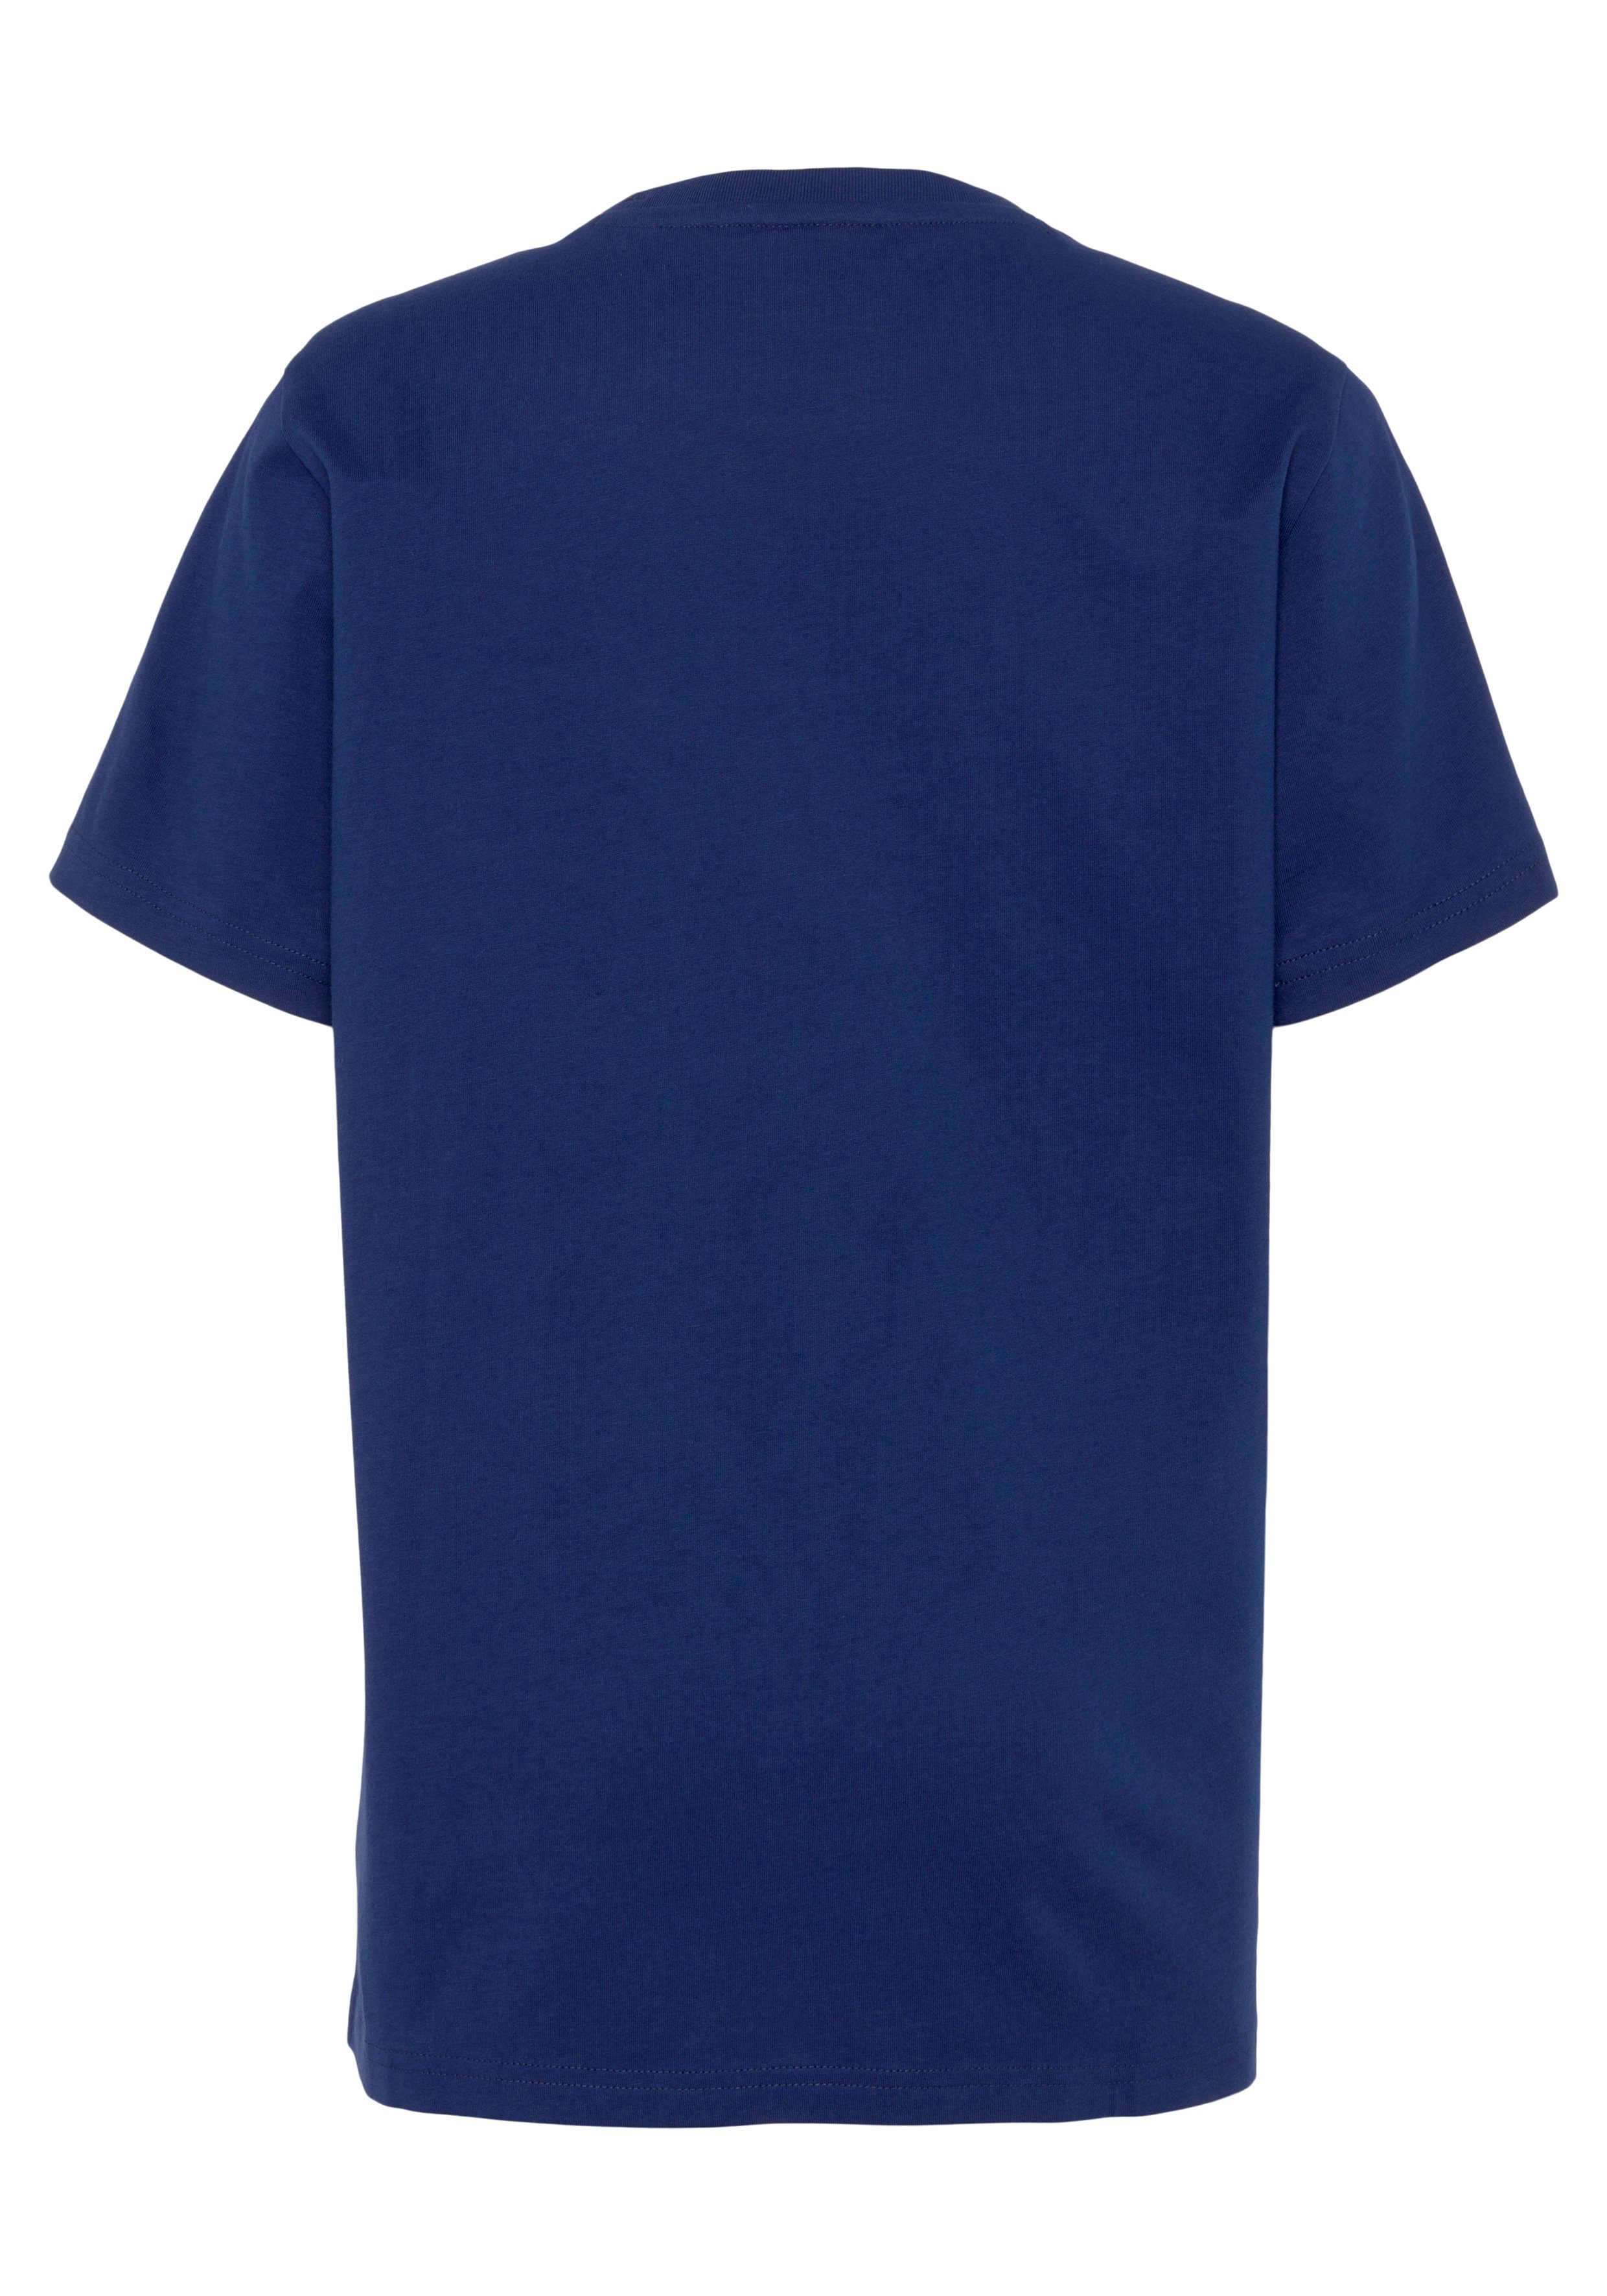 - Logo T-Shirt Champion Kinder Crewneck blau large für T-Shirt Classic